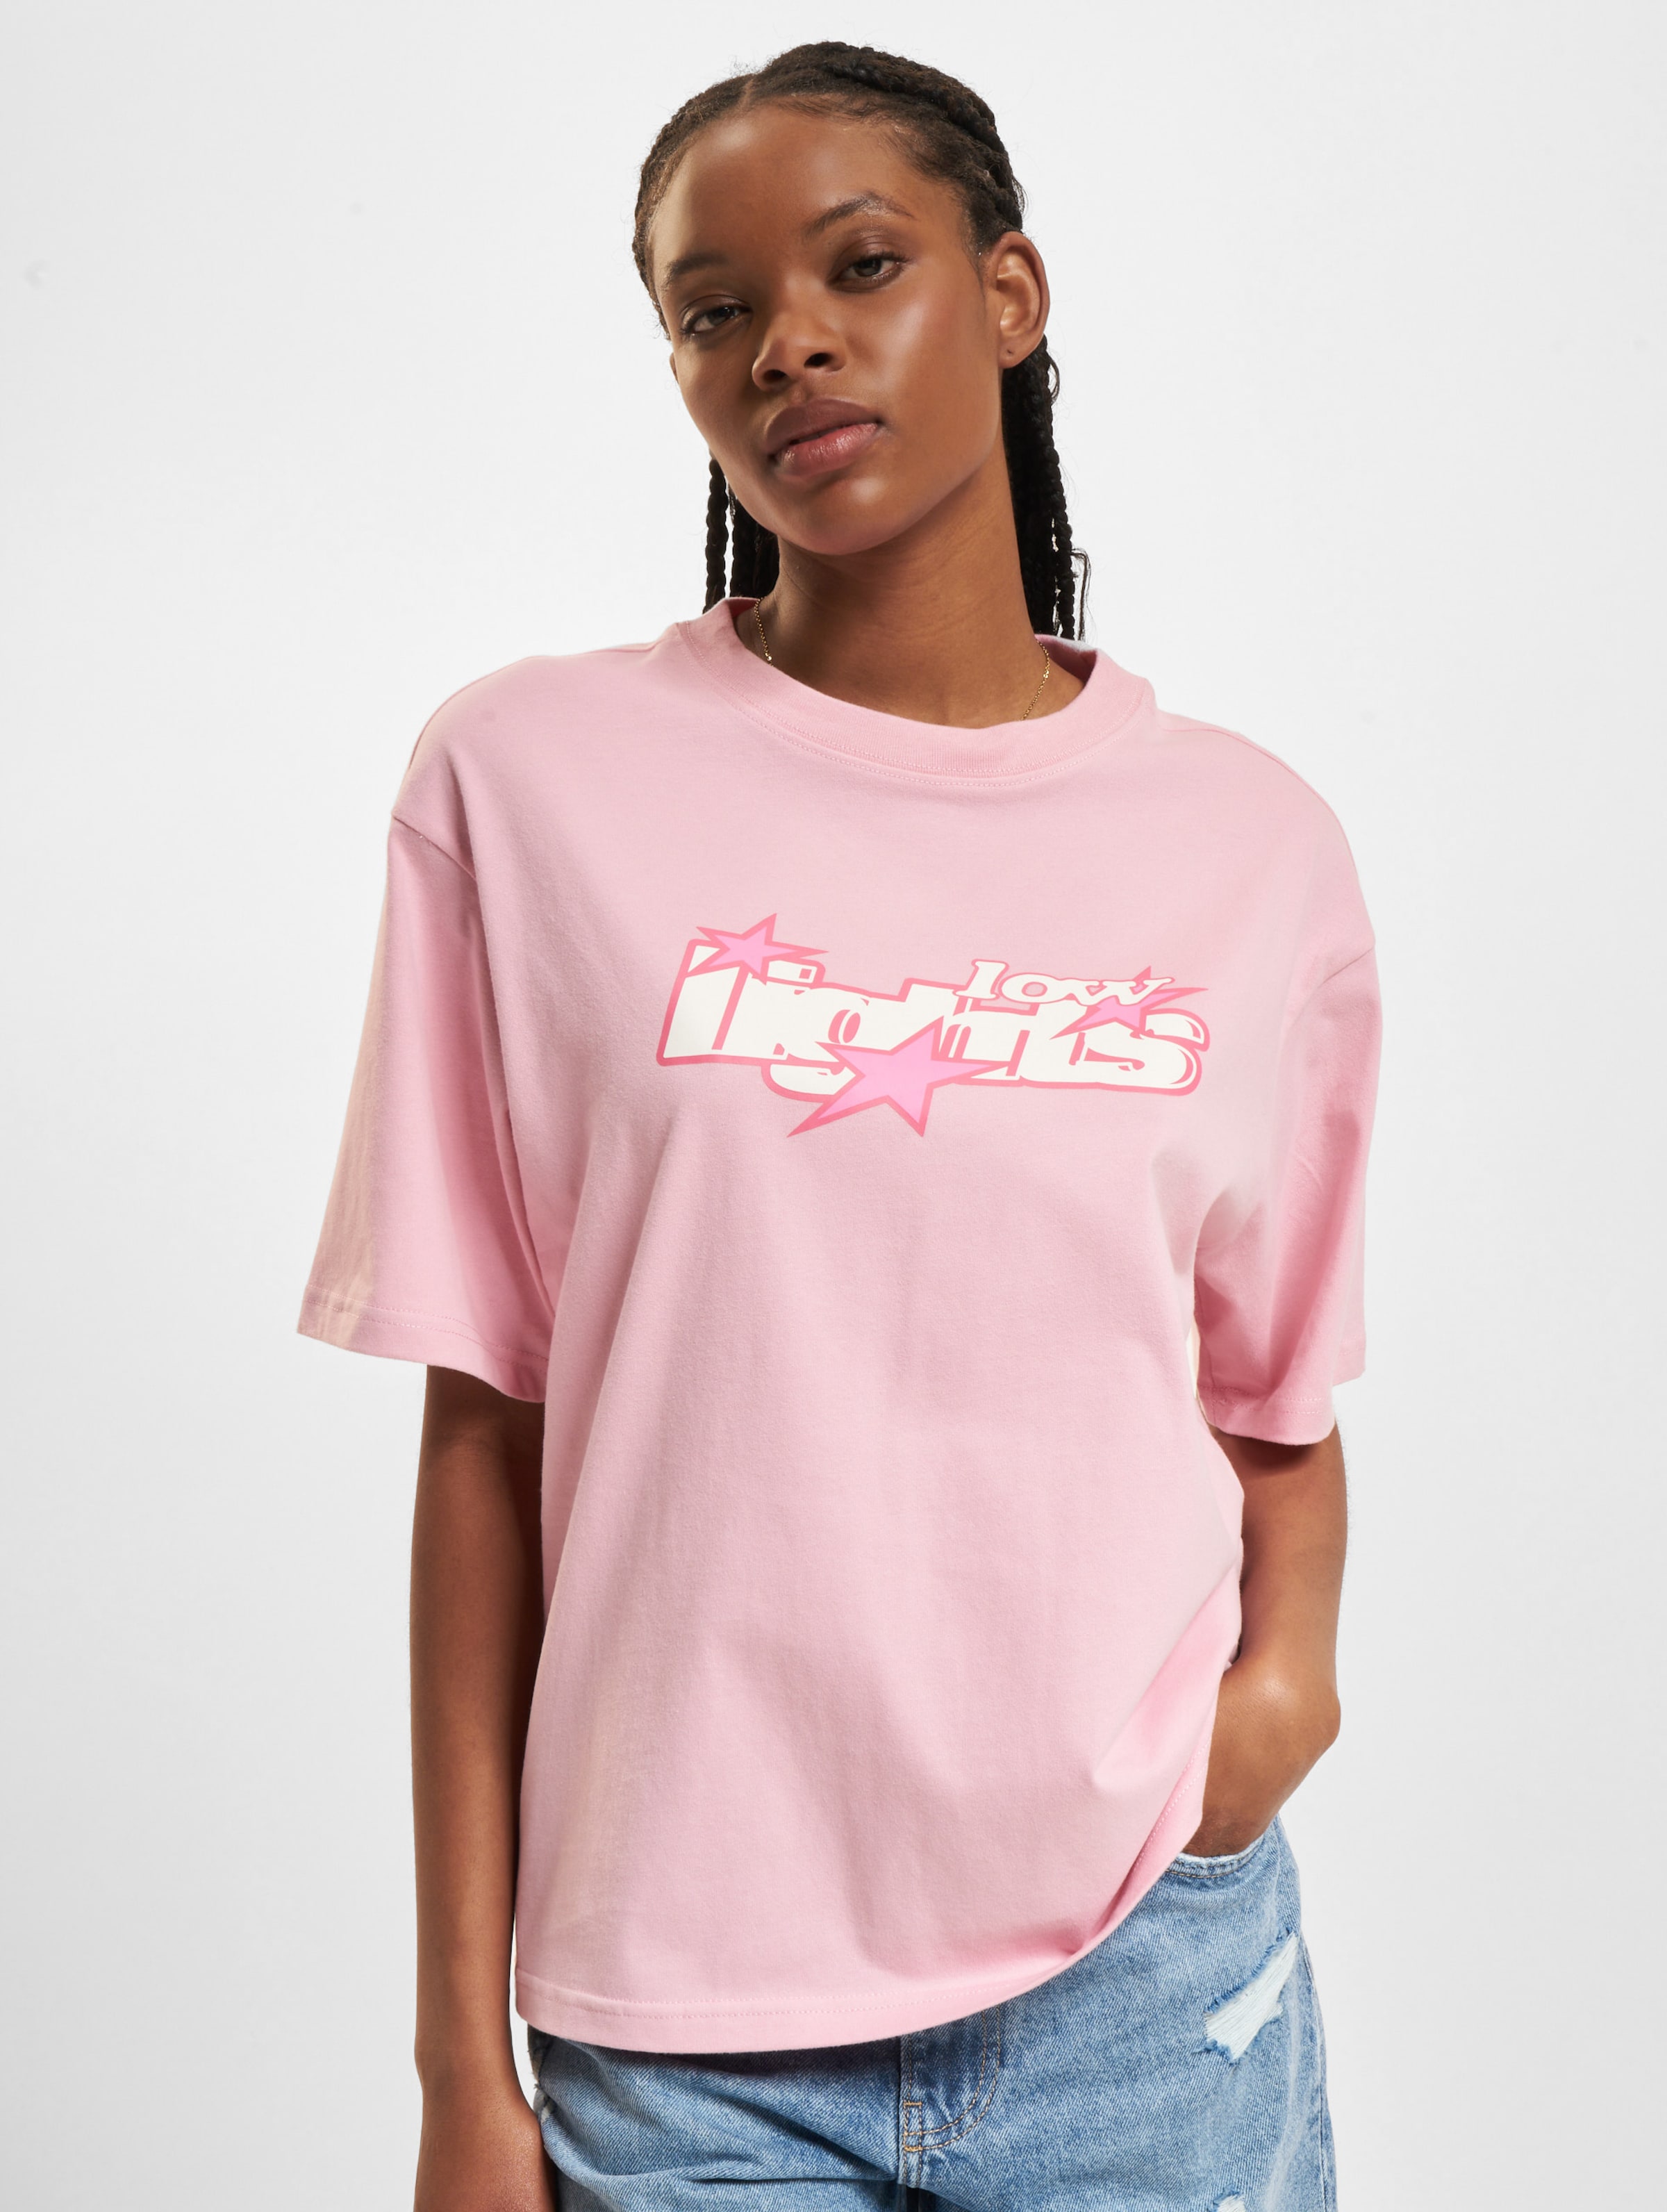 Low Lights Studios Lucky 7 Woman T-Shirt Frauen,Unisex op kleur roze, Maat XS